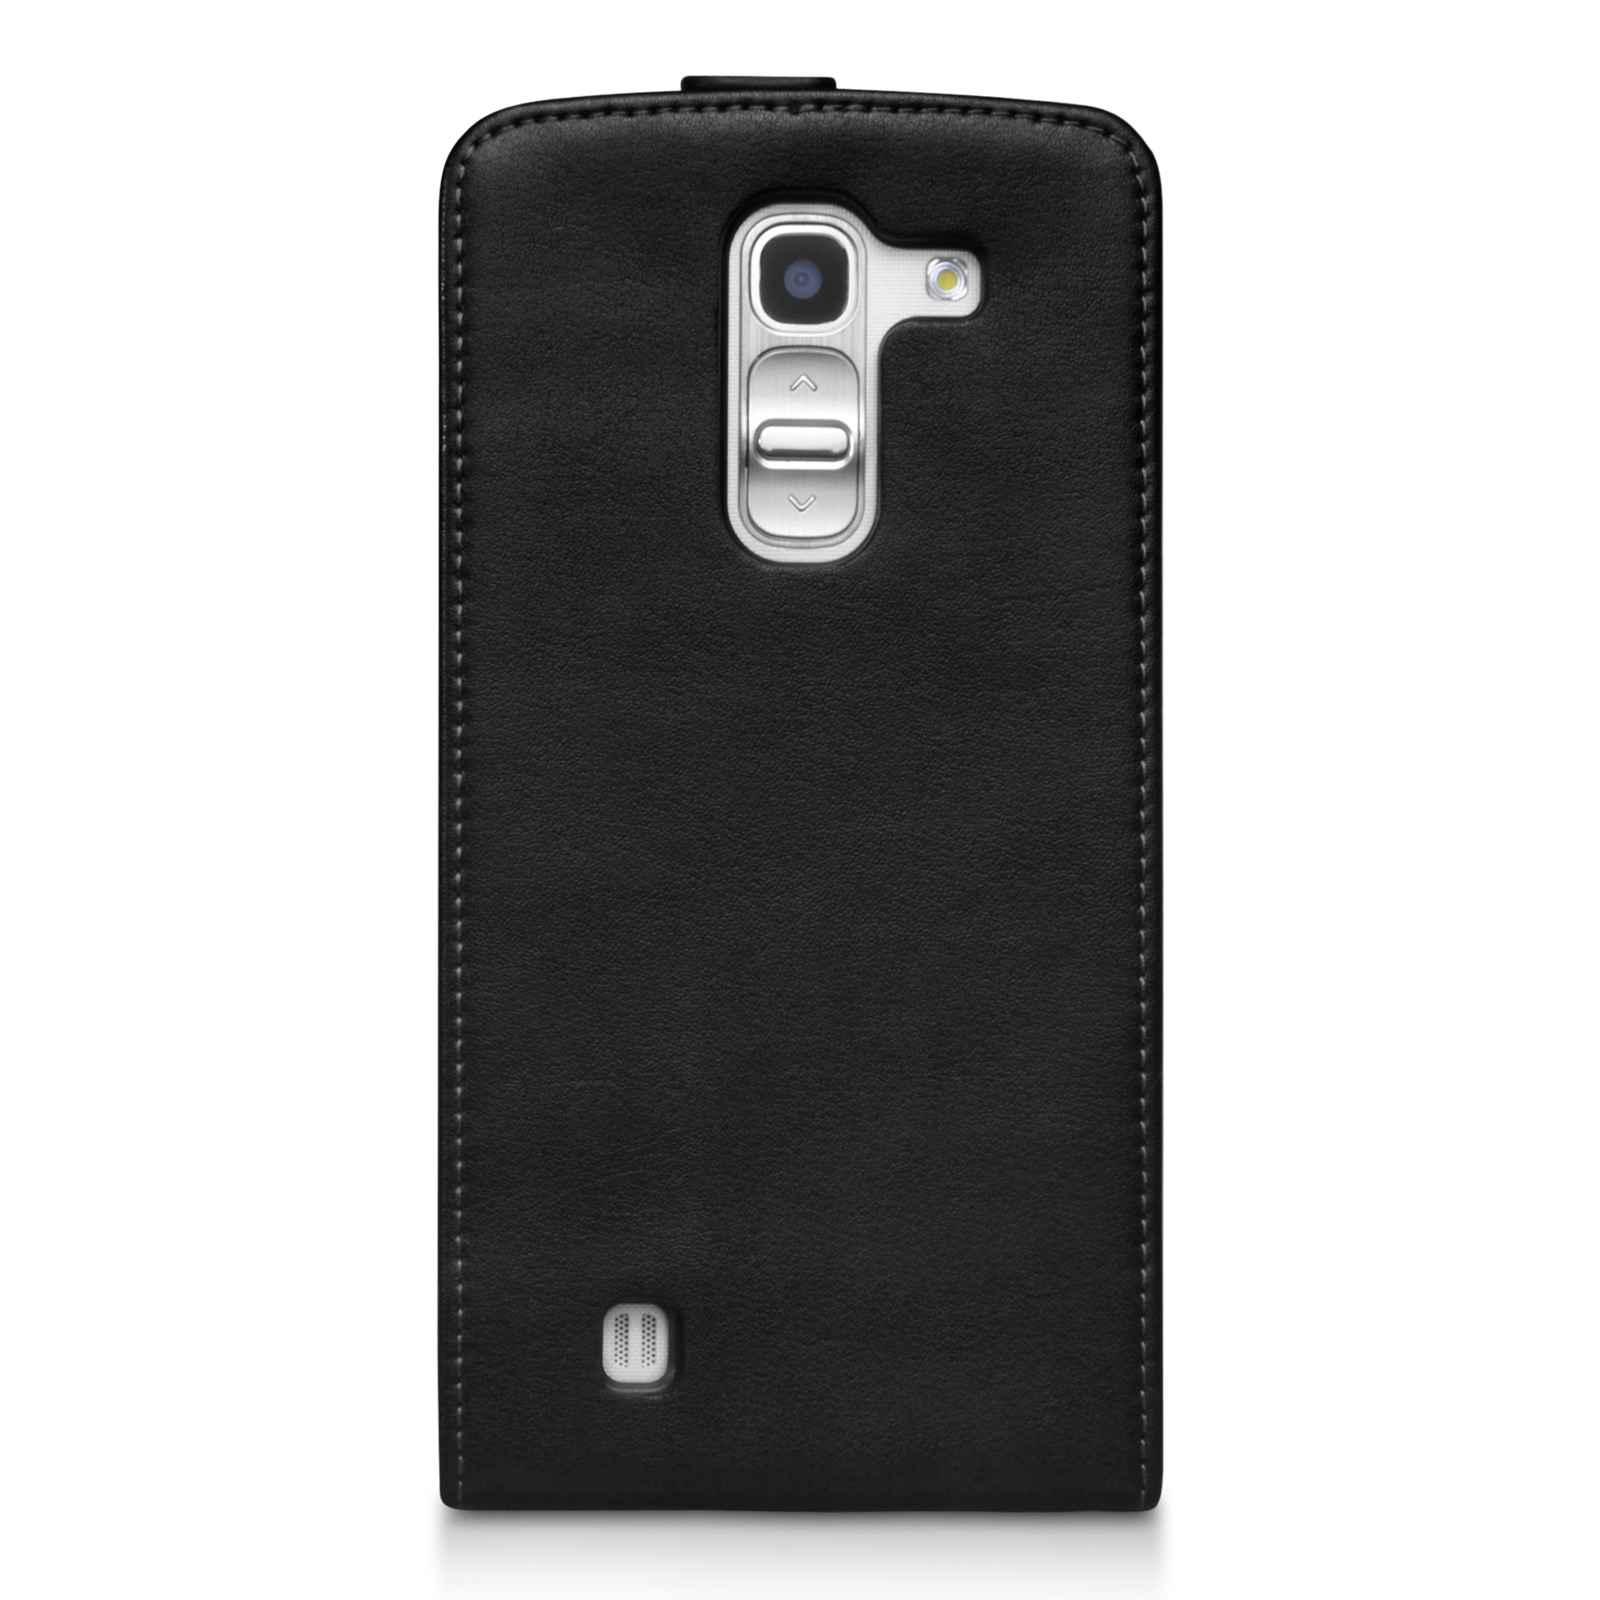 Caseflex LG G Pro 2 Real Leather Flip Case - Black